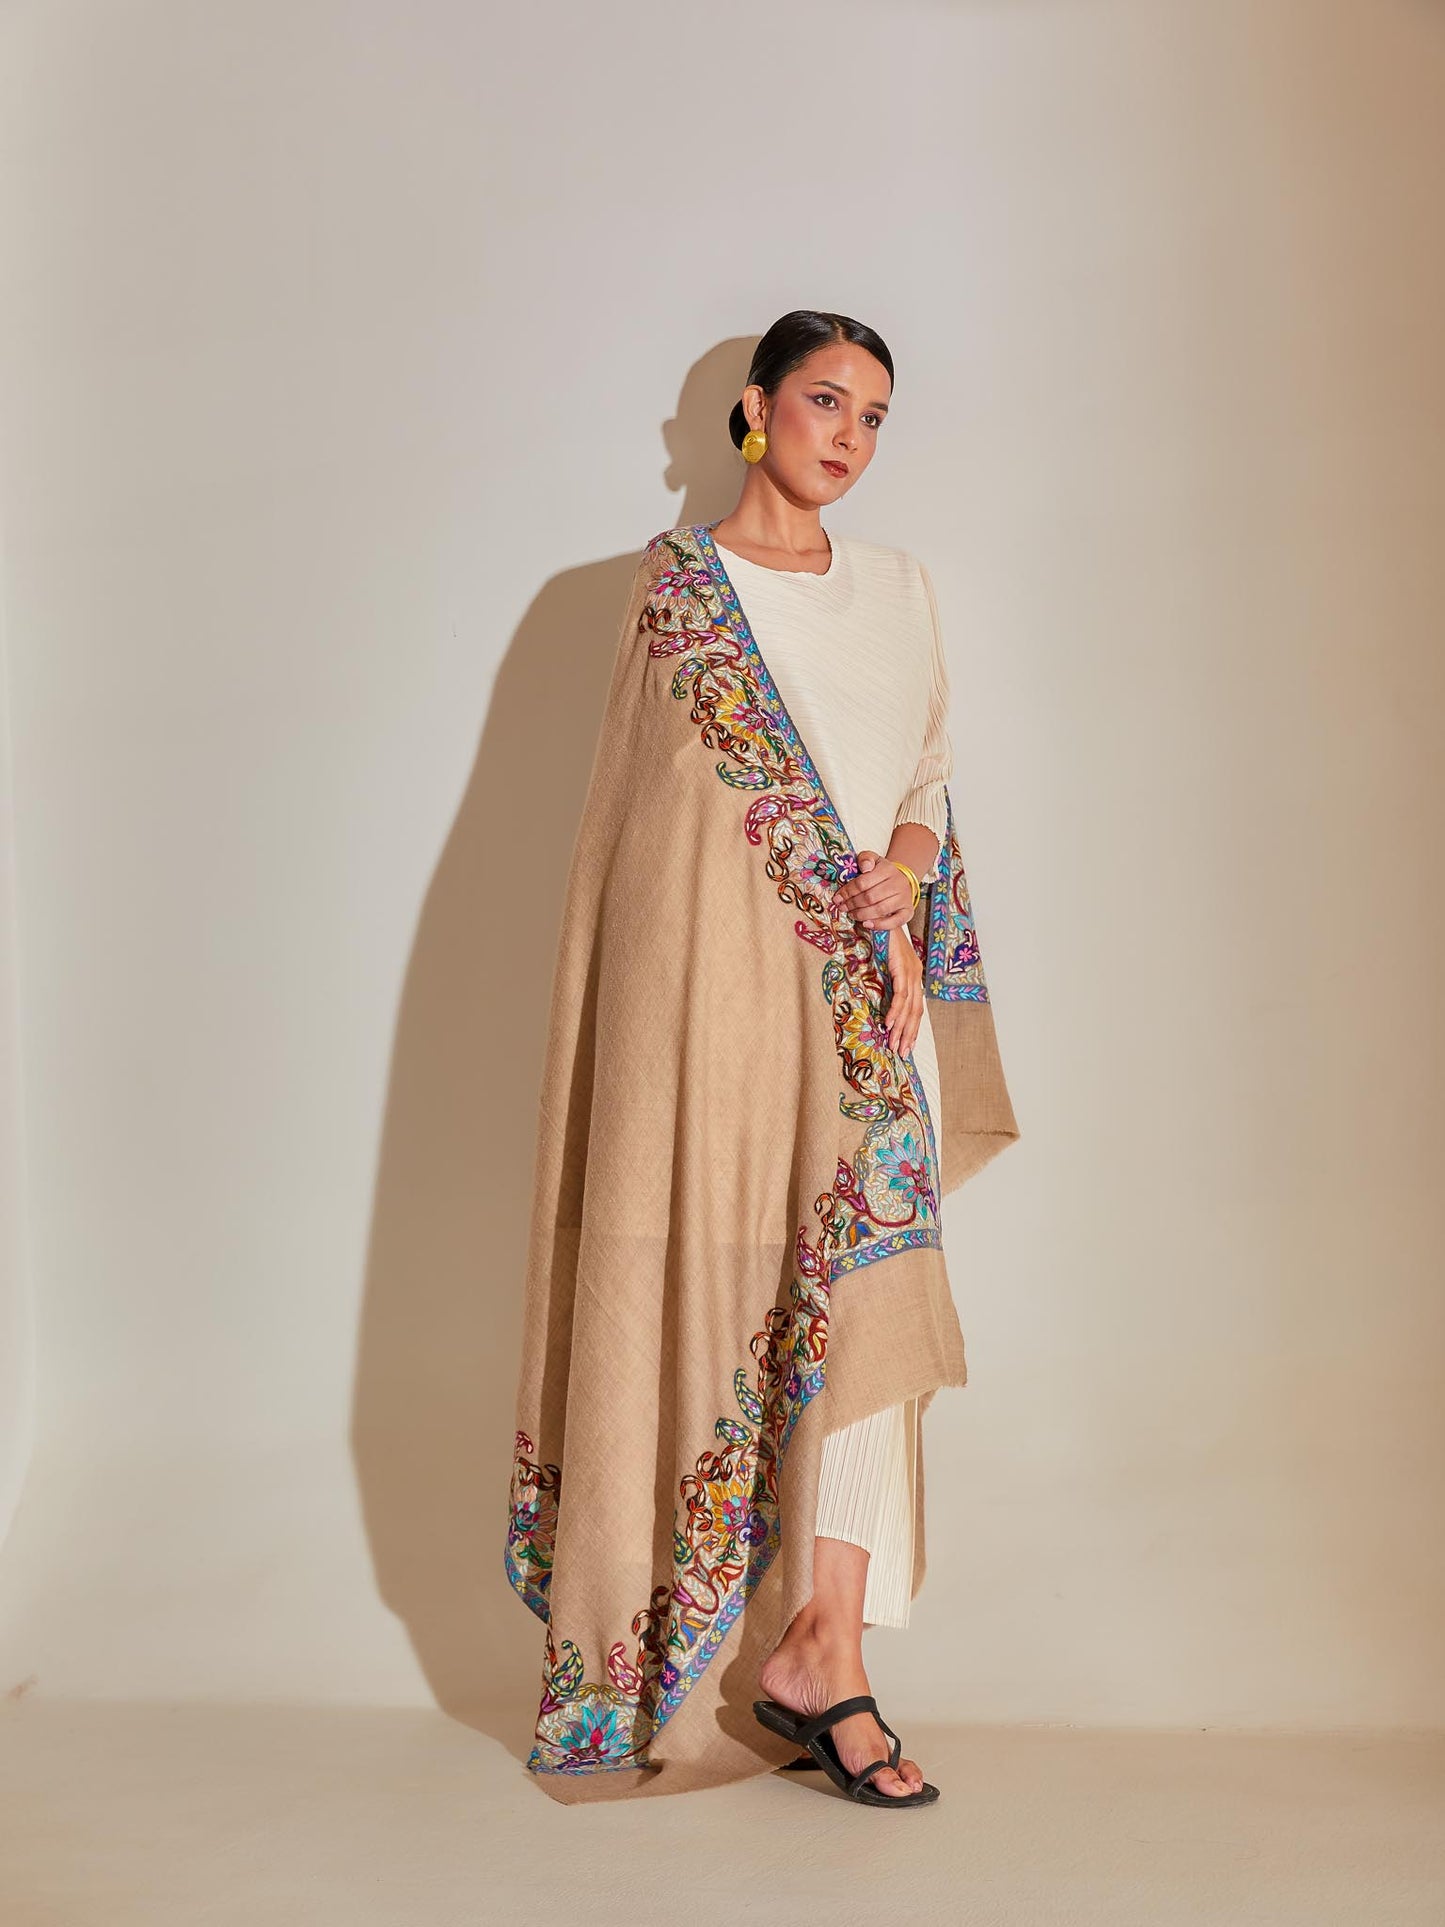 Model is wearing the Sahira Pashmina Shawl from Shaza.